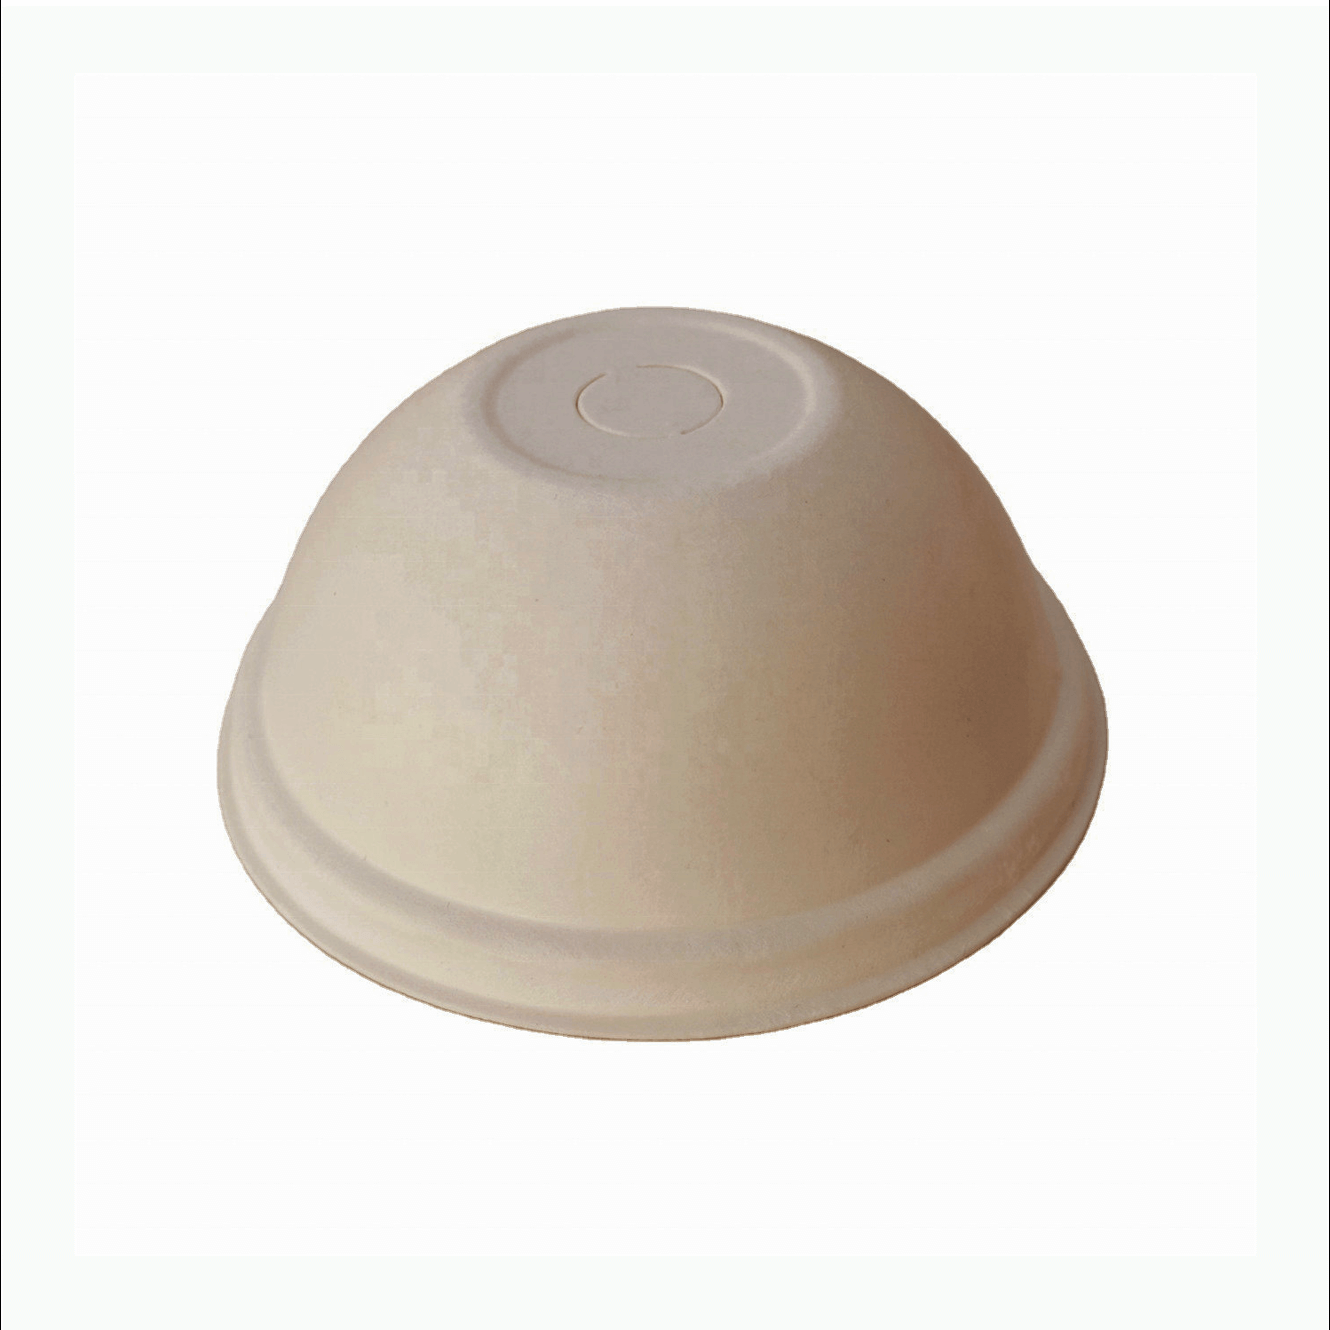 80mm Bagasse paper lid, dome shape, natural brown